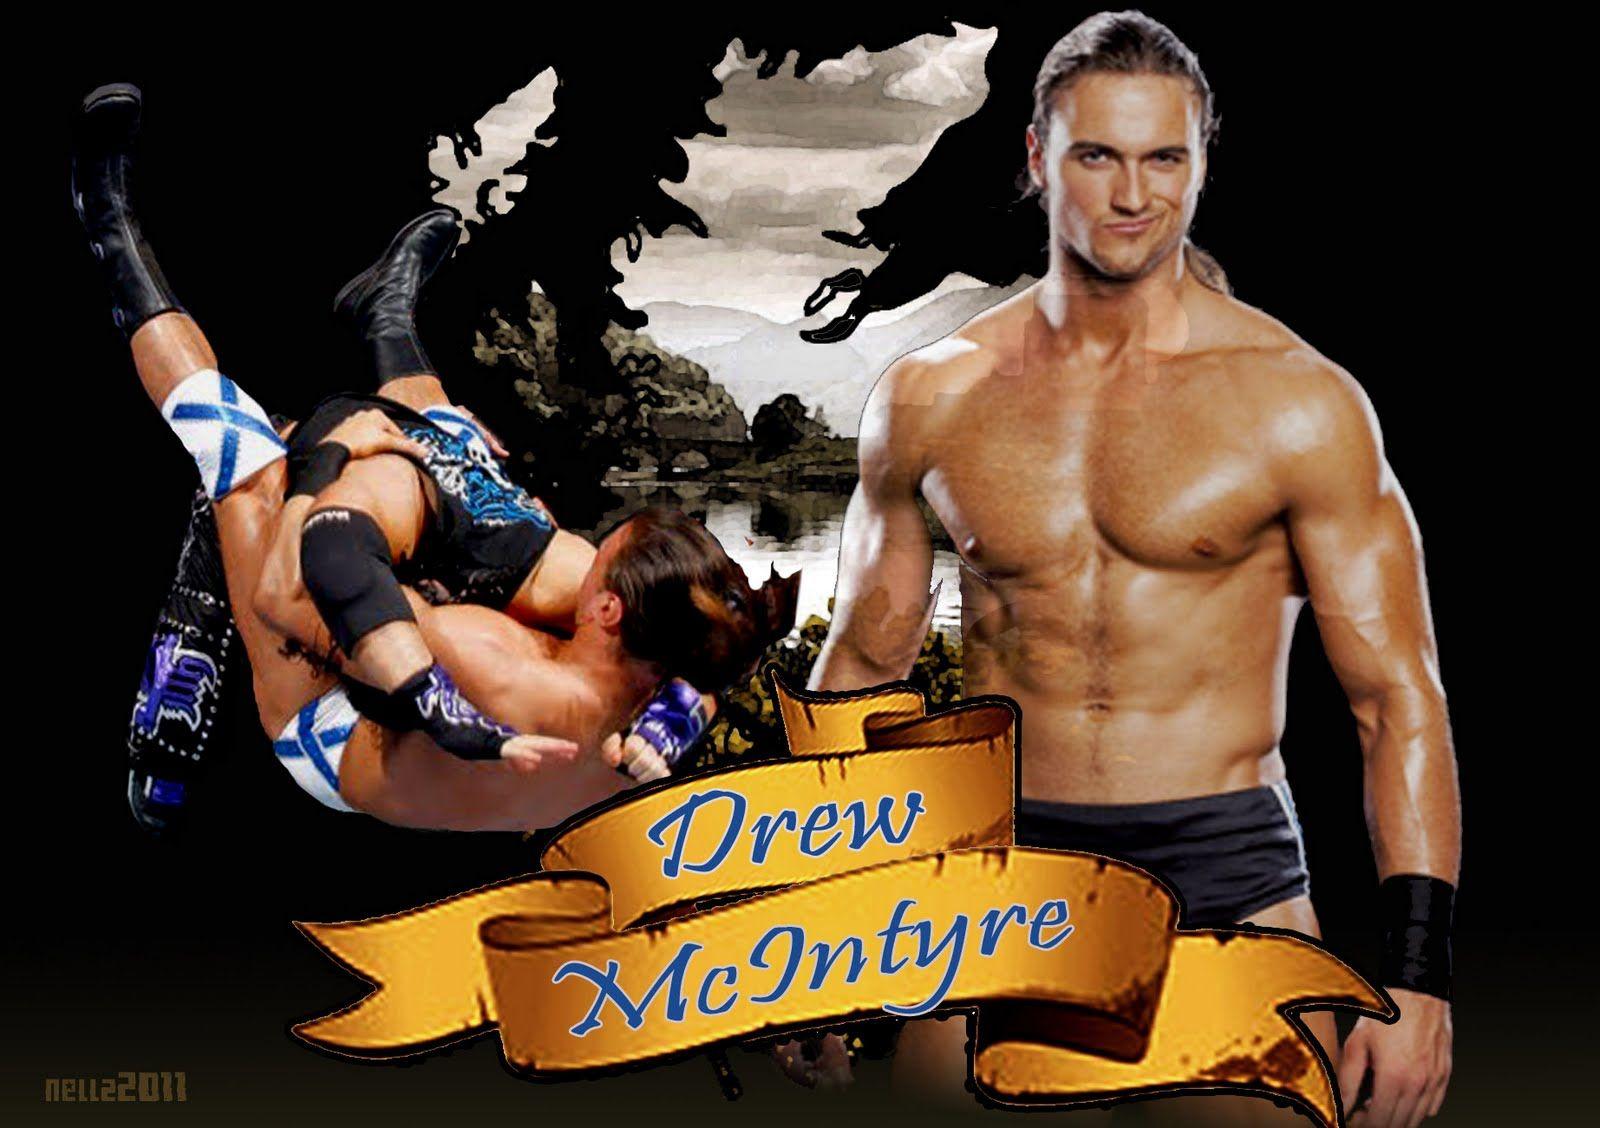 WWE WRESTLING CHAMPIONS: Drew Mcintyre Wallpapers.